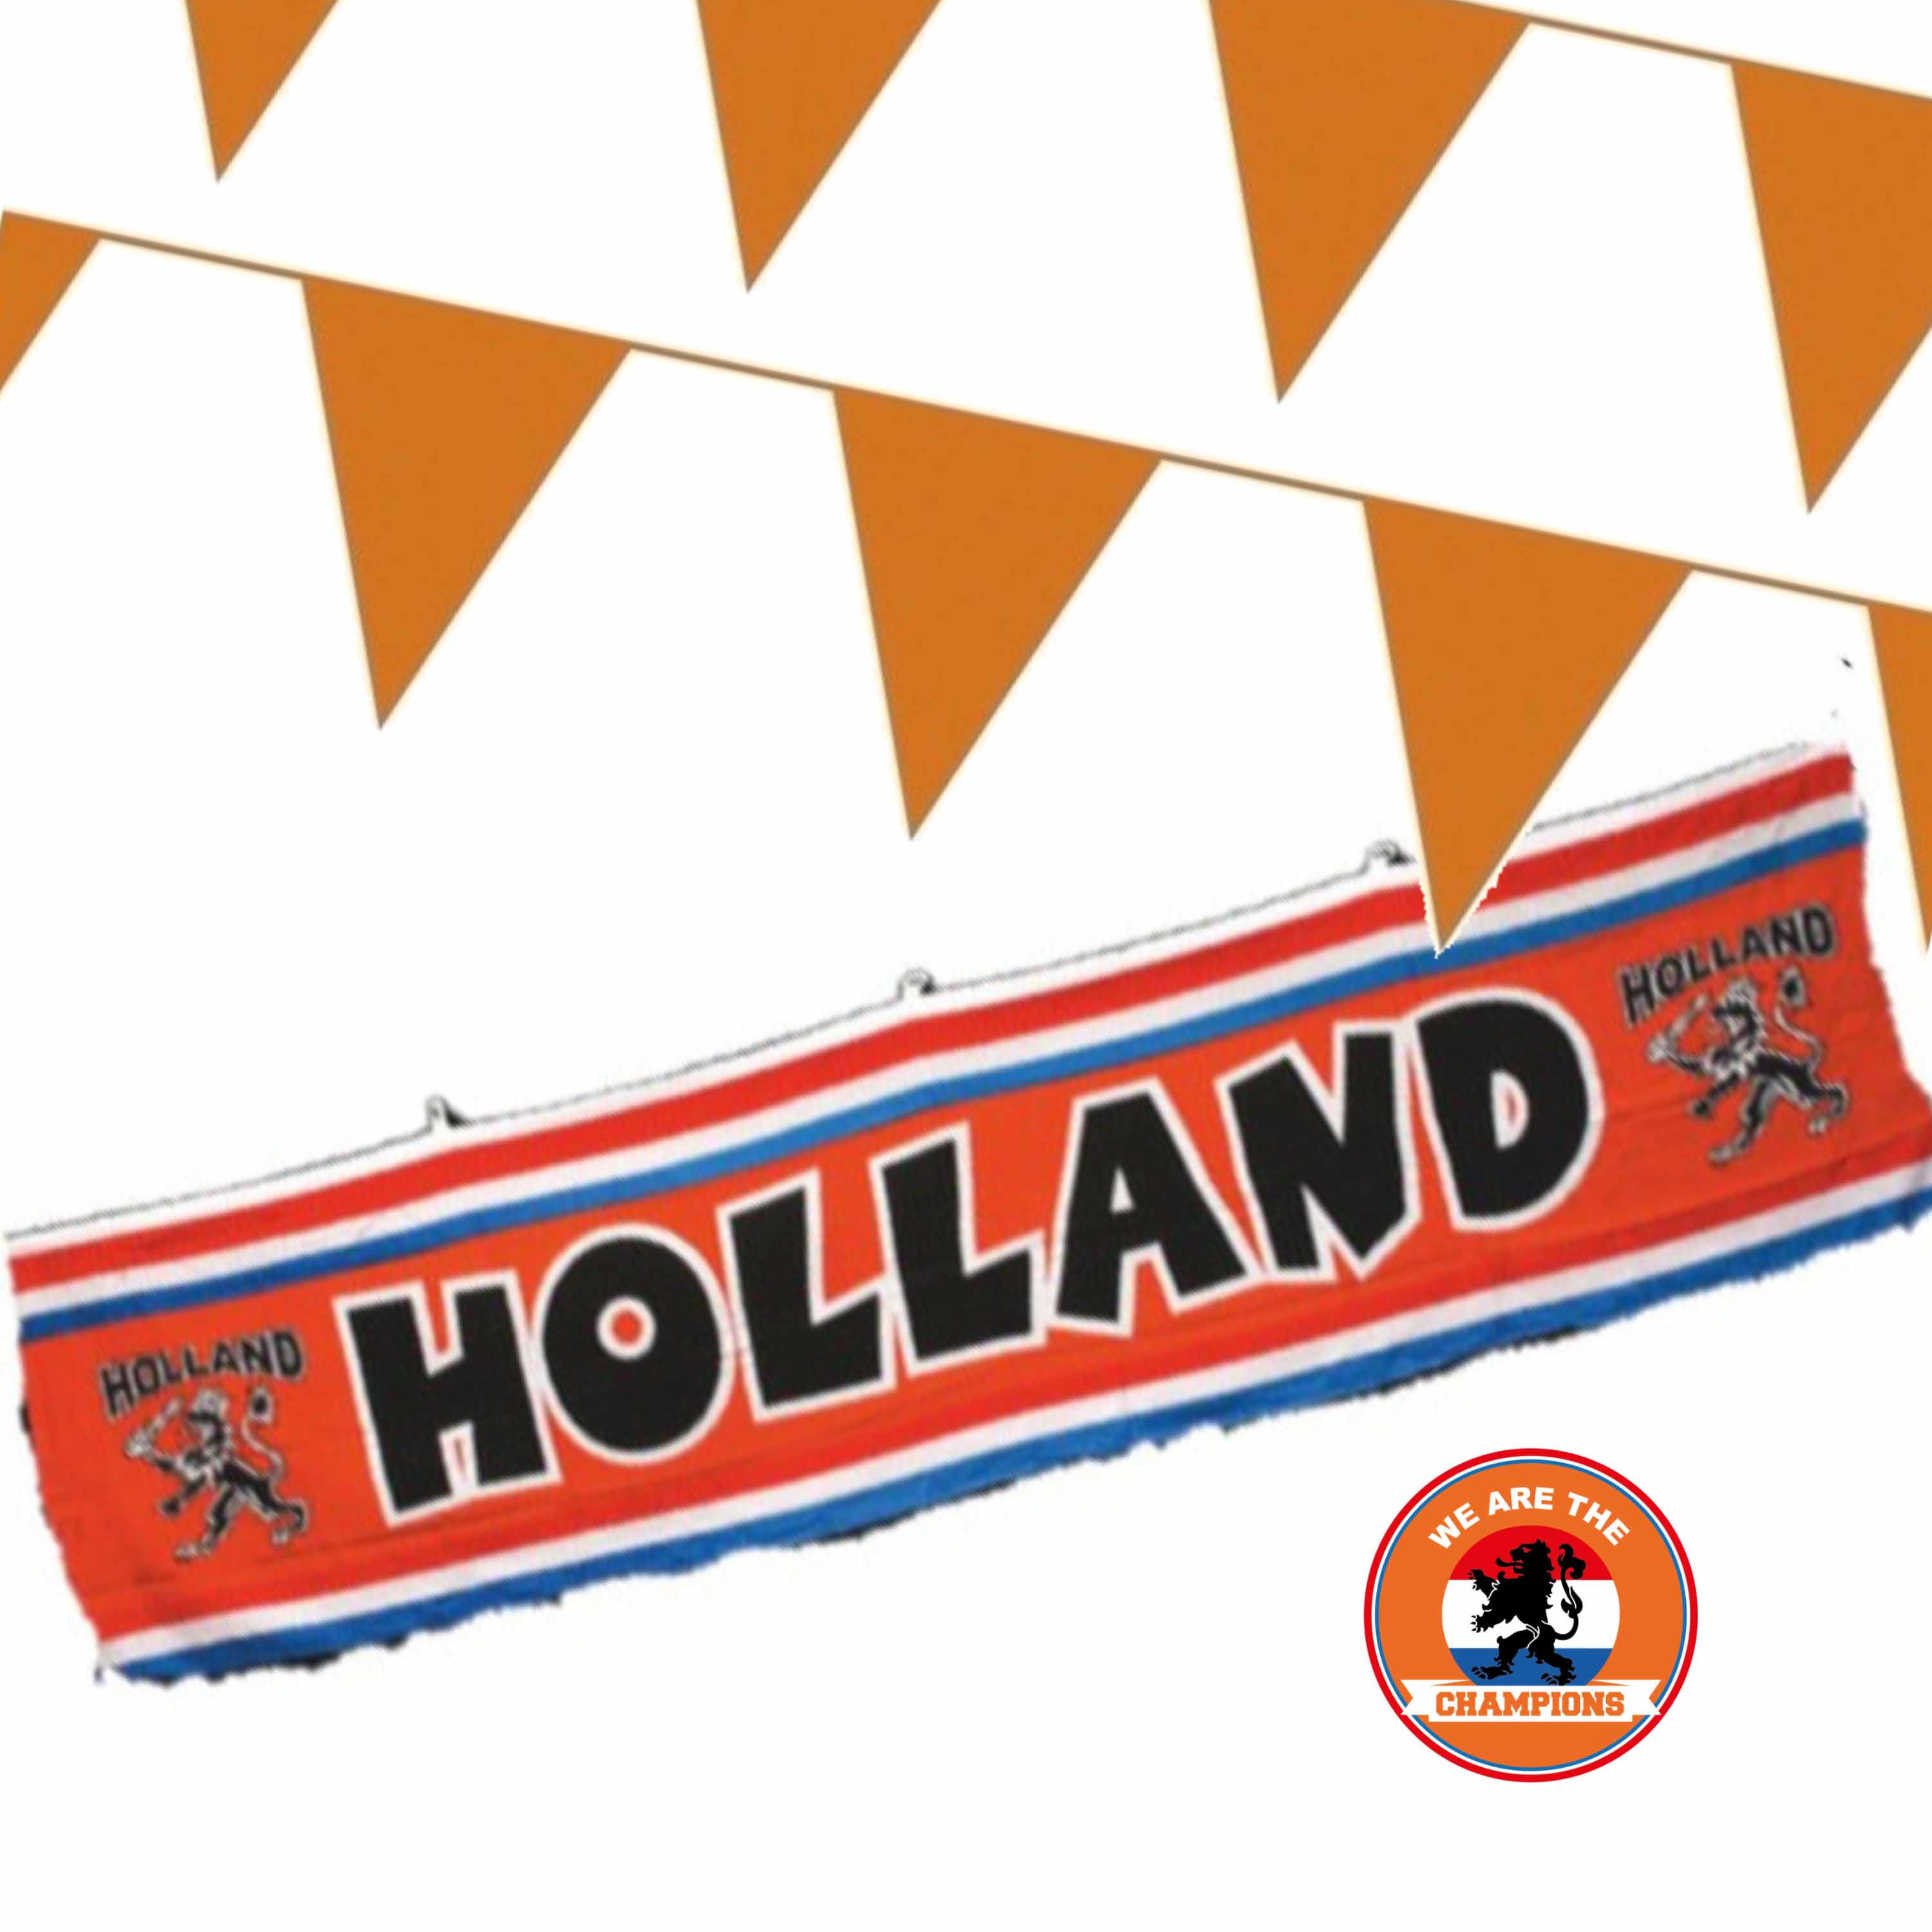 Ek oranje straat huis versiering pakket met oa 1x Holland spandoek 70 x300 en 300 m vlaggenlijnen